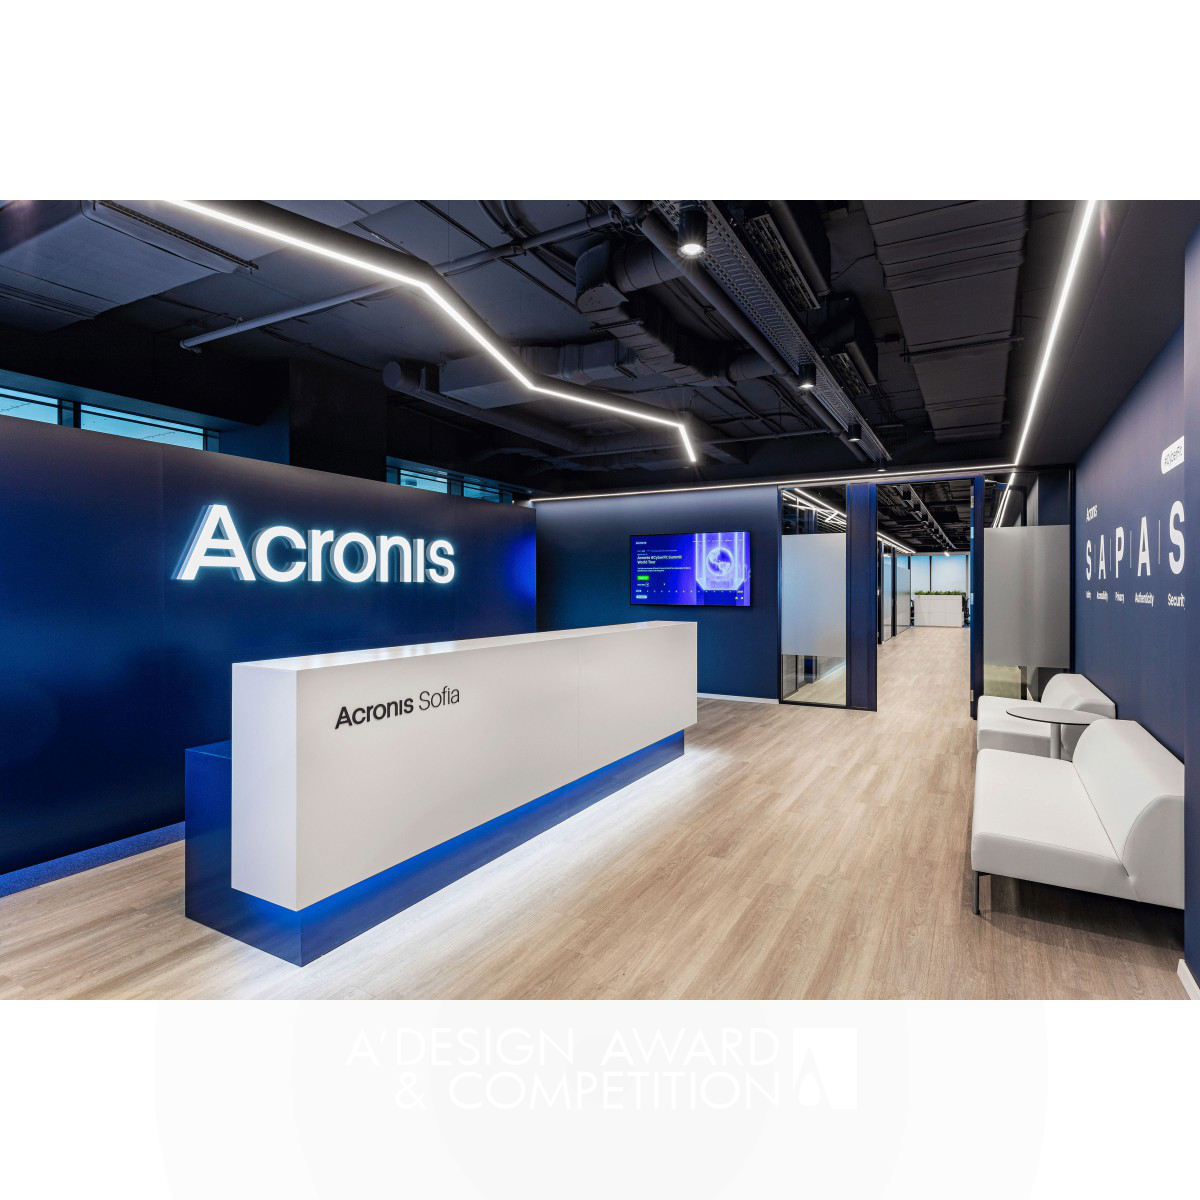 Acronis Sofia <b>Office Space